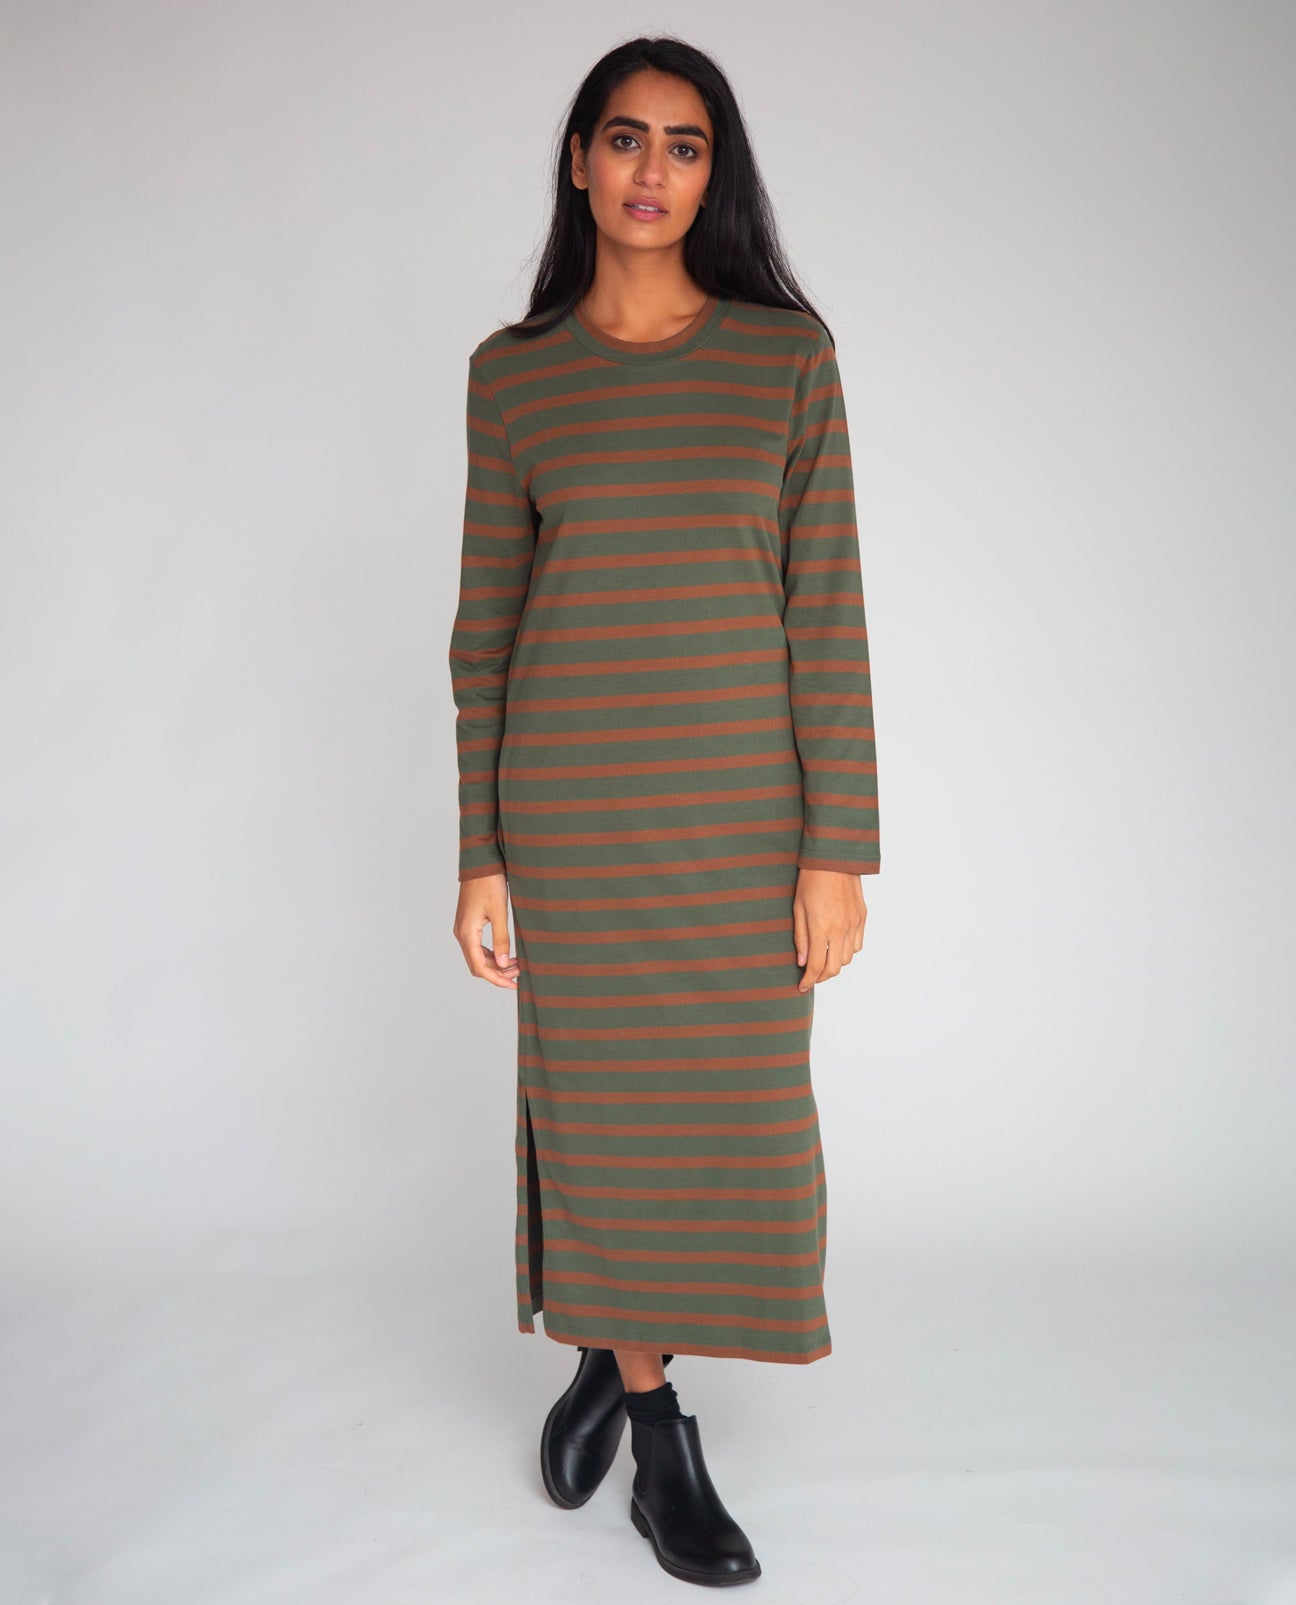 Raina-Sue Organic Cotton Dress In Army & Tan